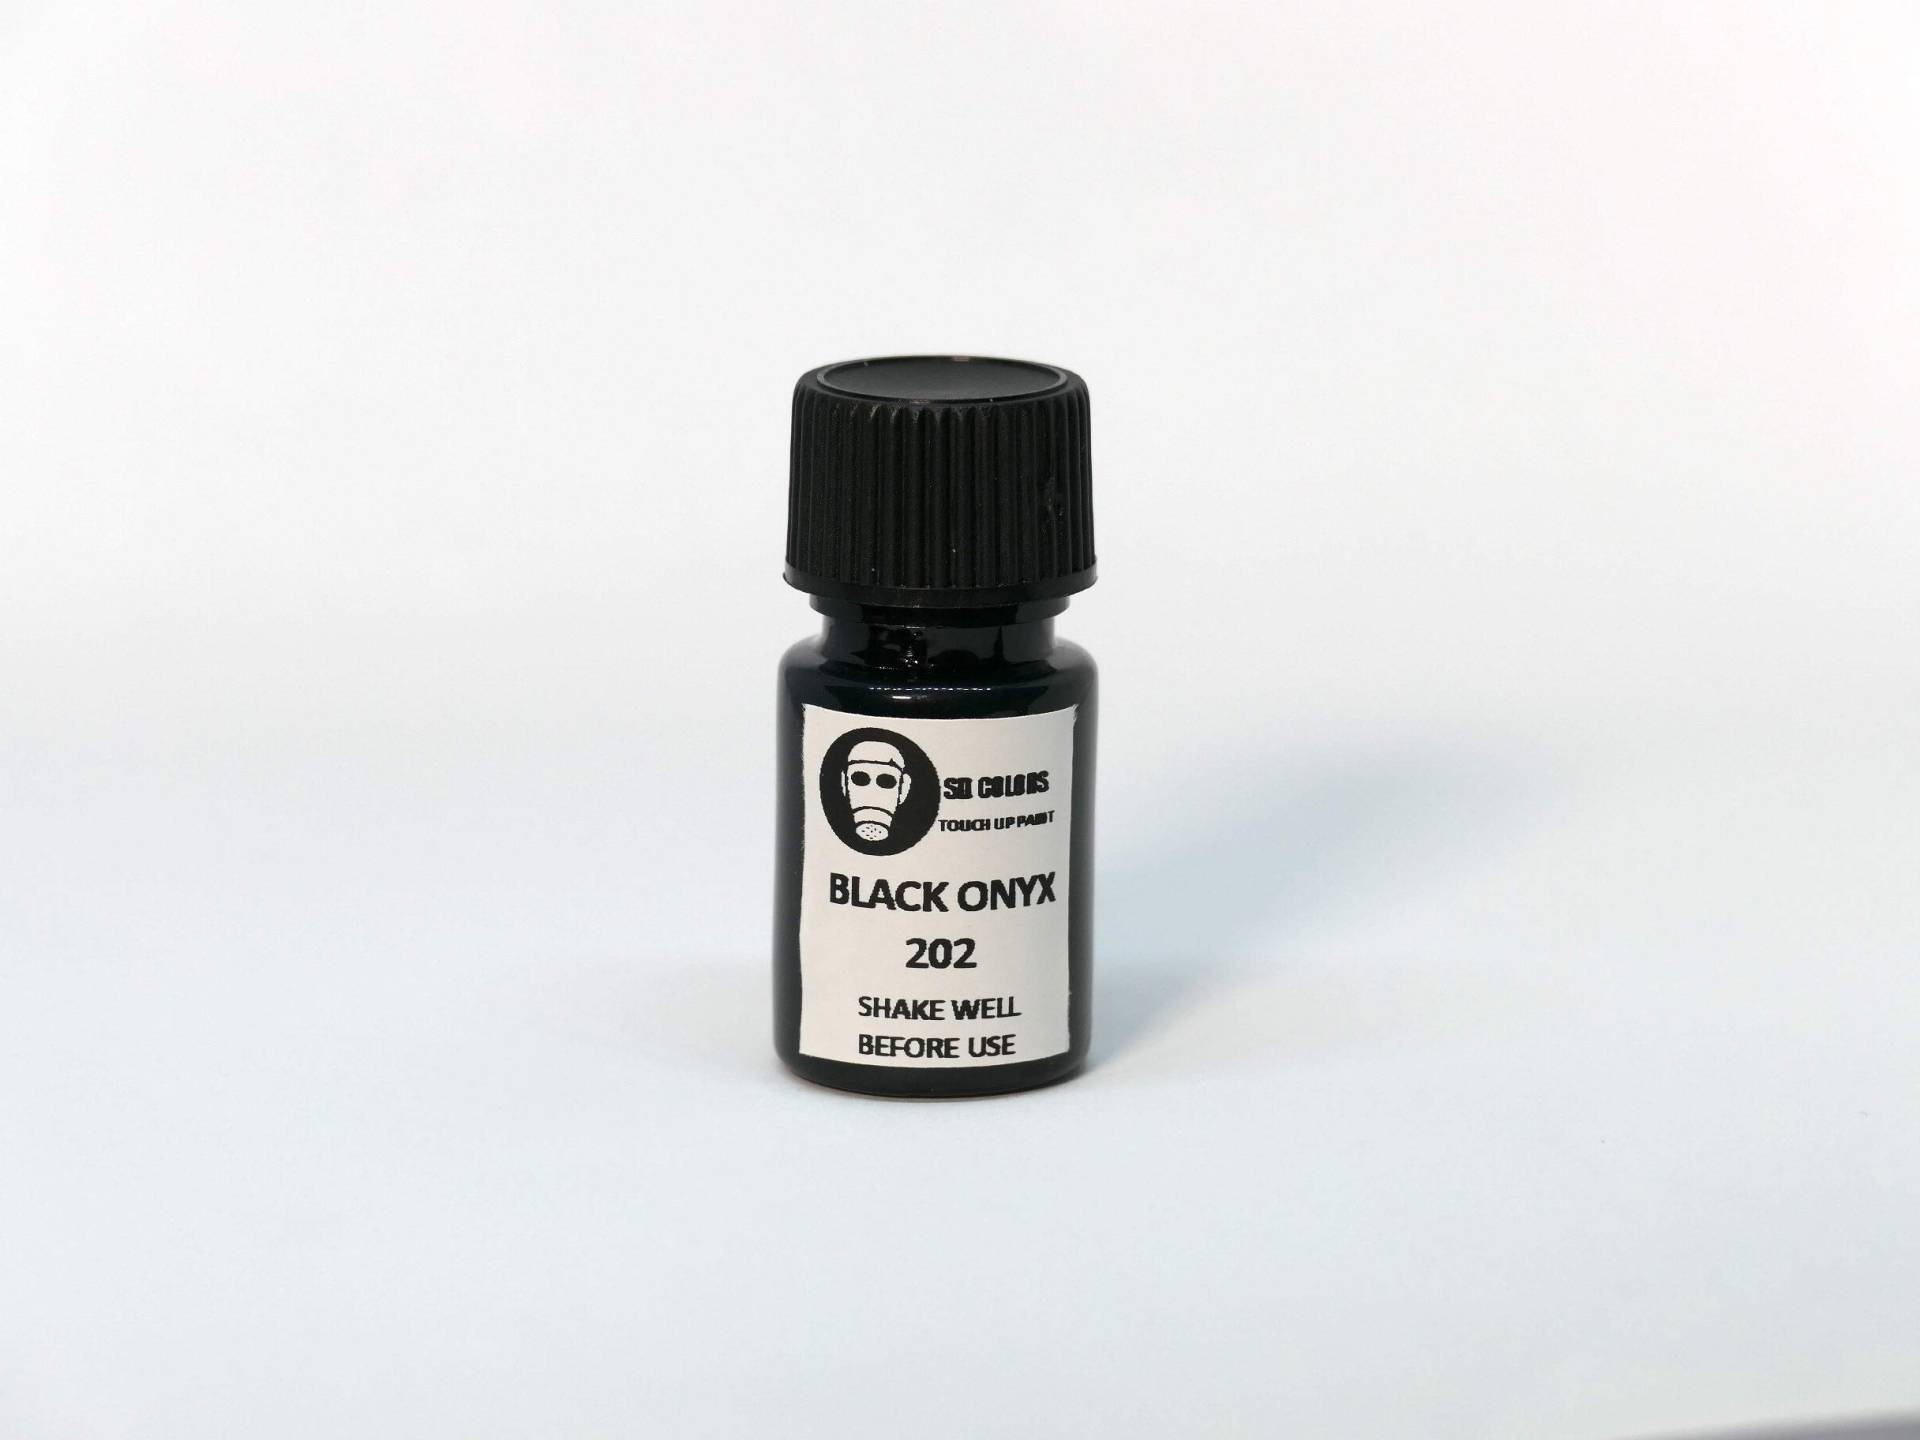 SD COLORS Black Onyx 202 Ausbesserungslack, 5 ml, Reparatur-Pinsel, Farbcode 202 Black Onyx (Just Paint) von SD COLORS